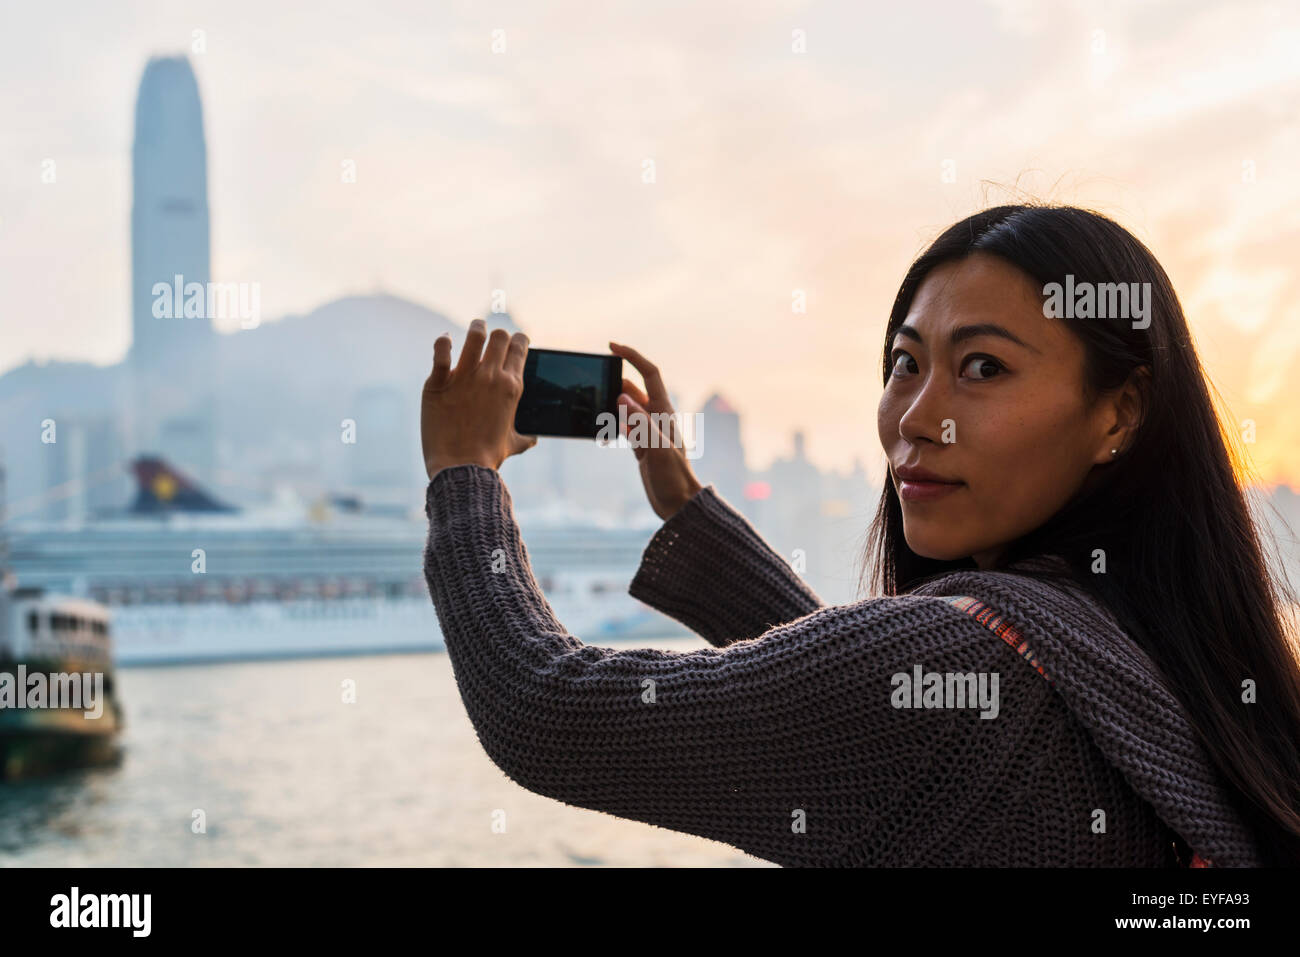 A young woman photographs buildings across the water, Kowloon; Hong Kong, China Stock Photo